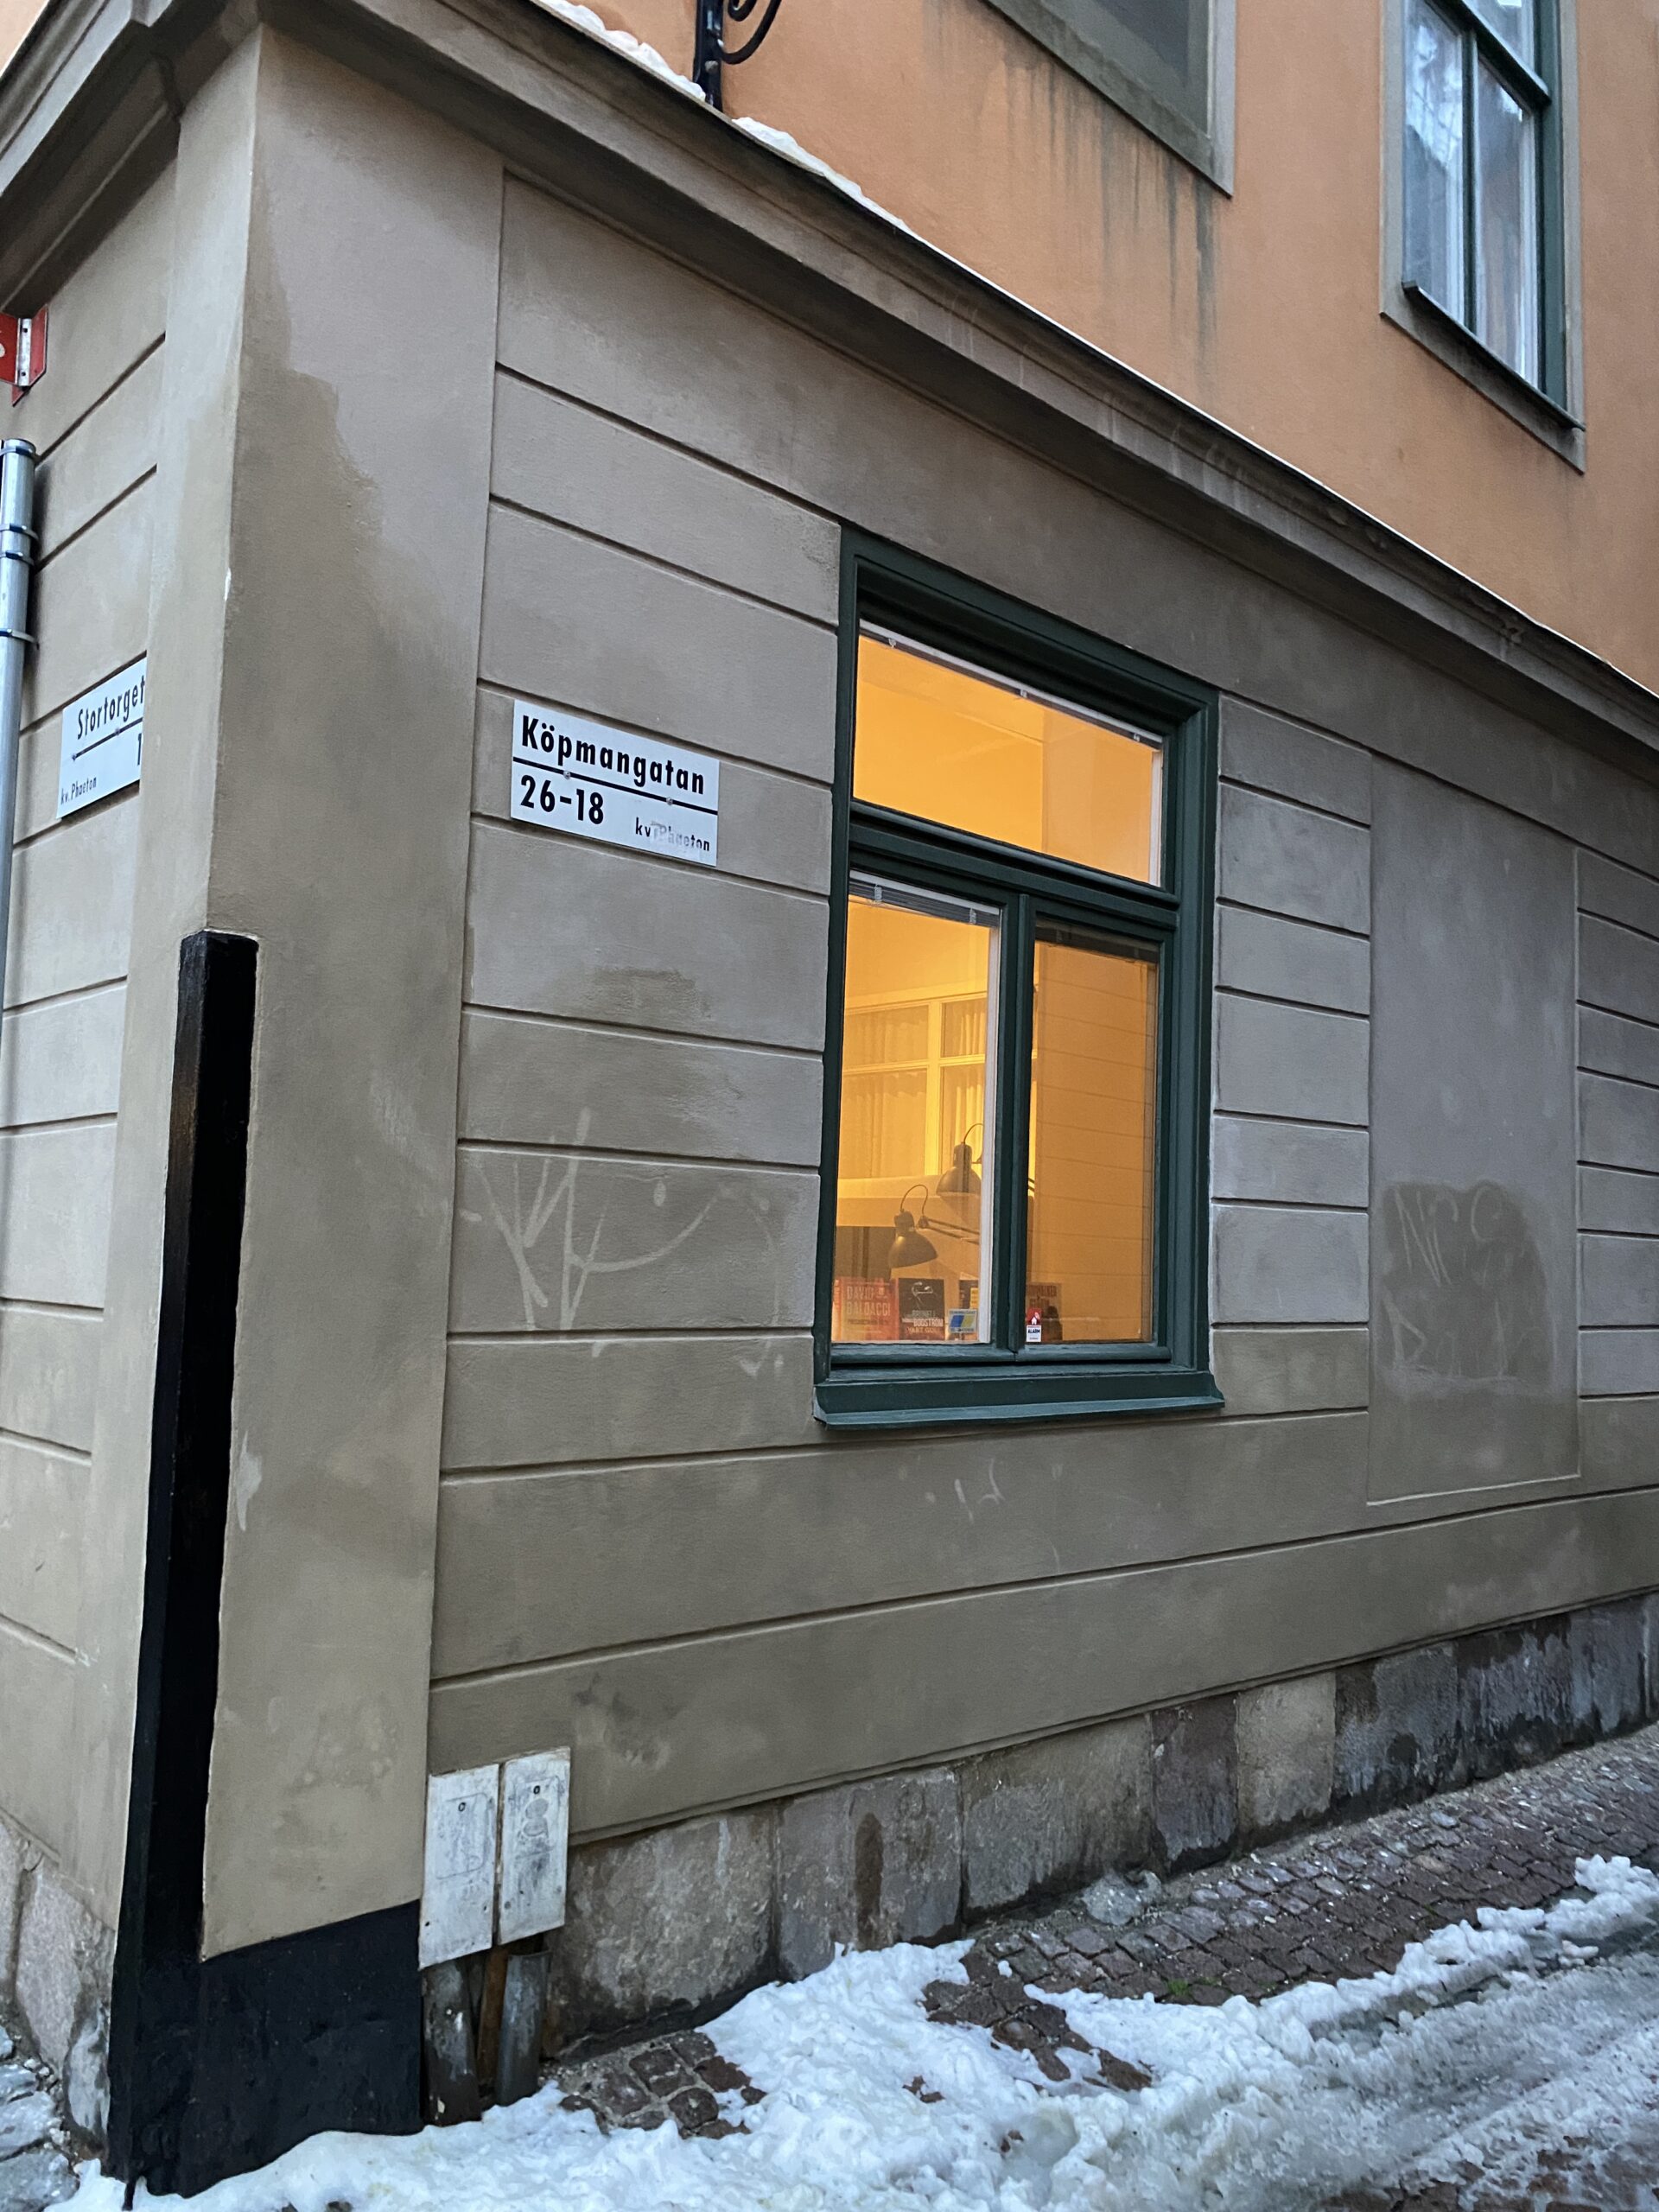 Köpmangatan oldest street Stockholm Sarah Latham 